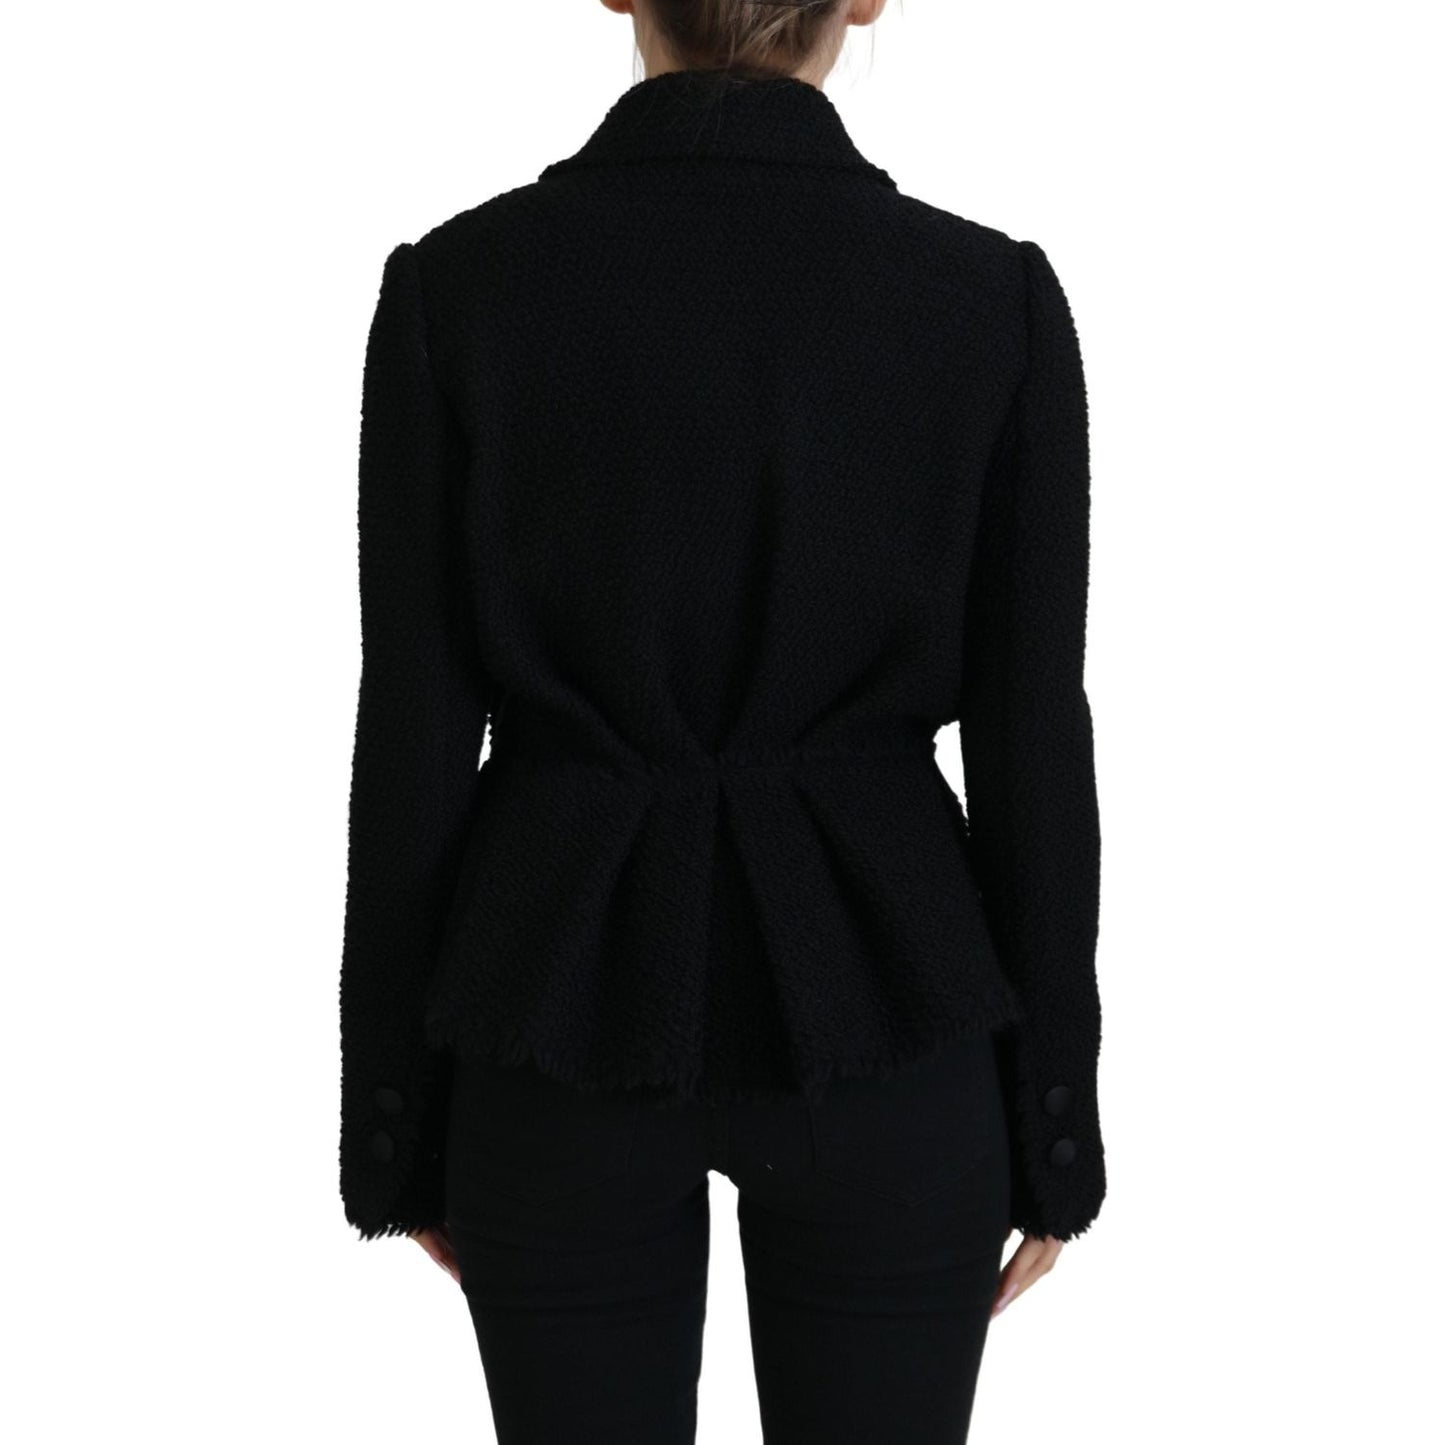 Dolce & Gabbana Elegant Double Breasted Wool-Silk Jacket black-wool-coat-blazer-wrap-jacket